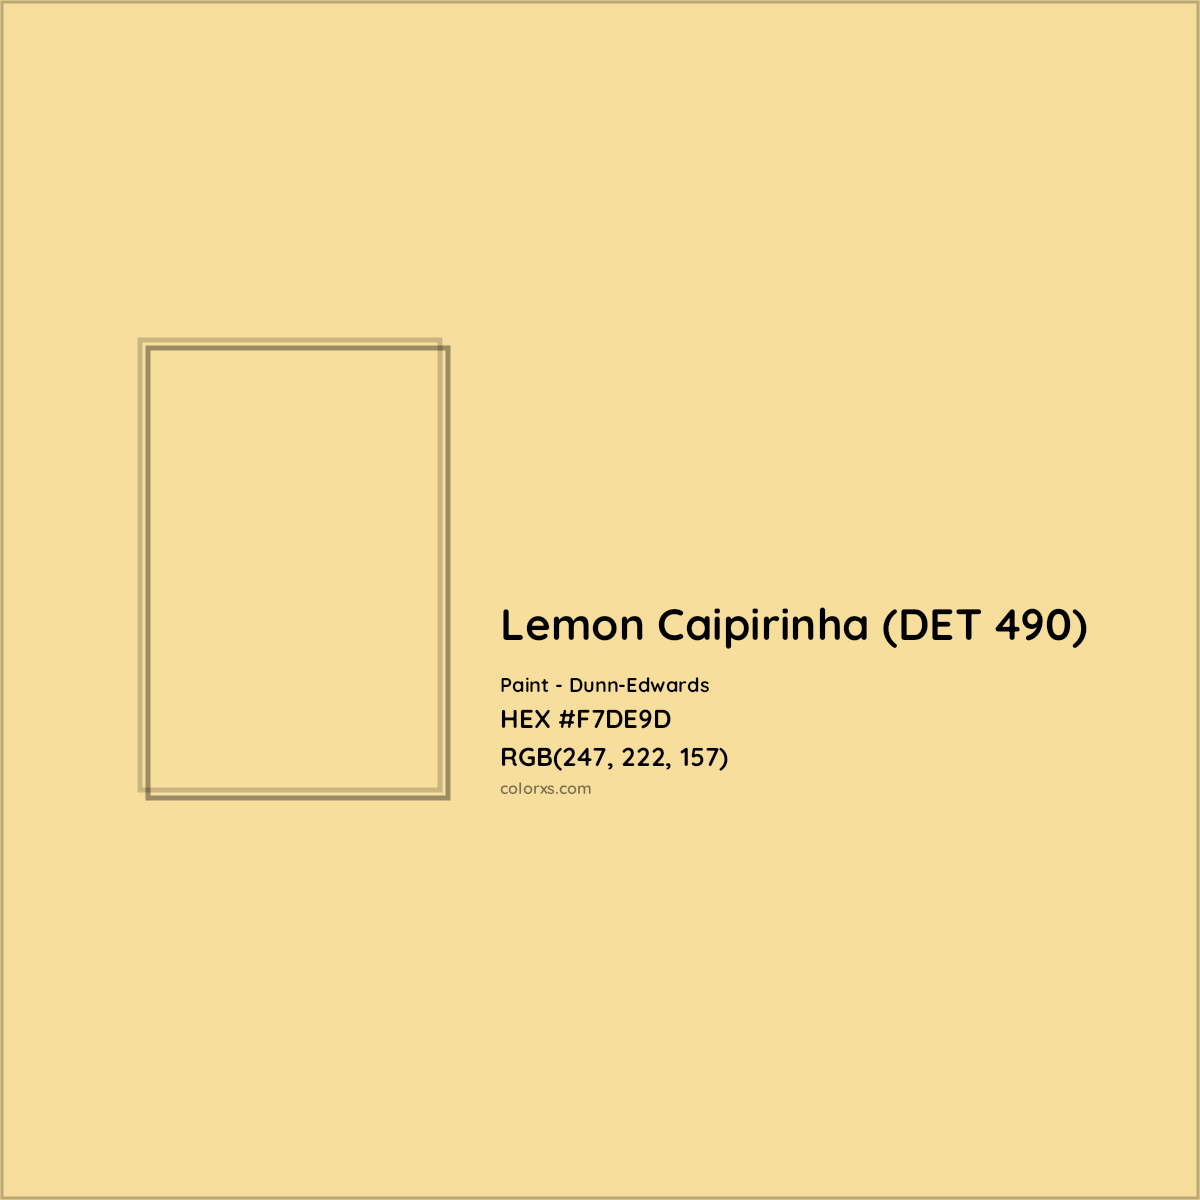 HEX #F7DE9D Lemon Caipirinha (DET 490) Paint Dunn-Edwards - Color Code